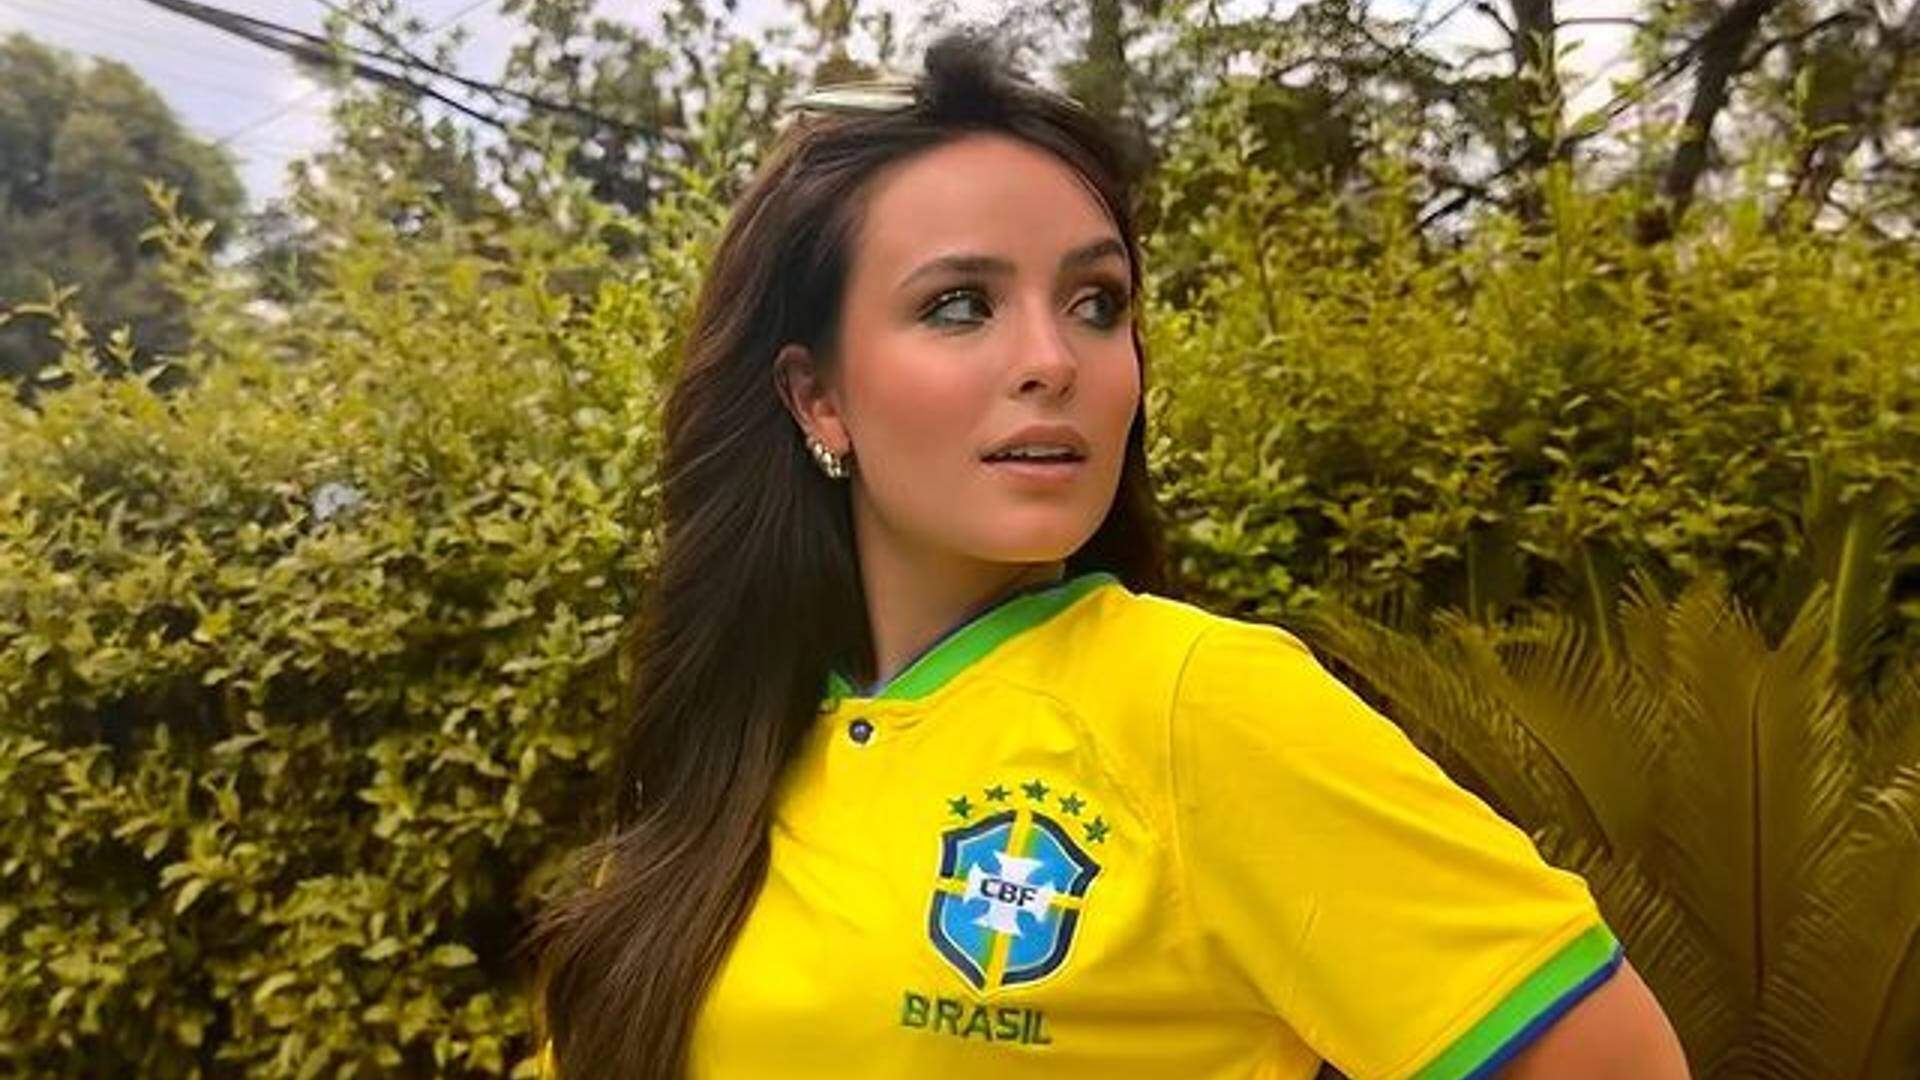 Após jogo do Brasil, Larissa Manoela levanta a perna demais e saia sobe no volume GG: “Ops” - Metropolitana FM